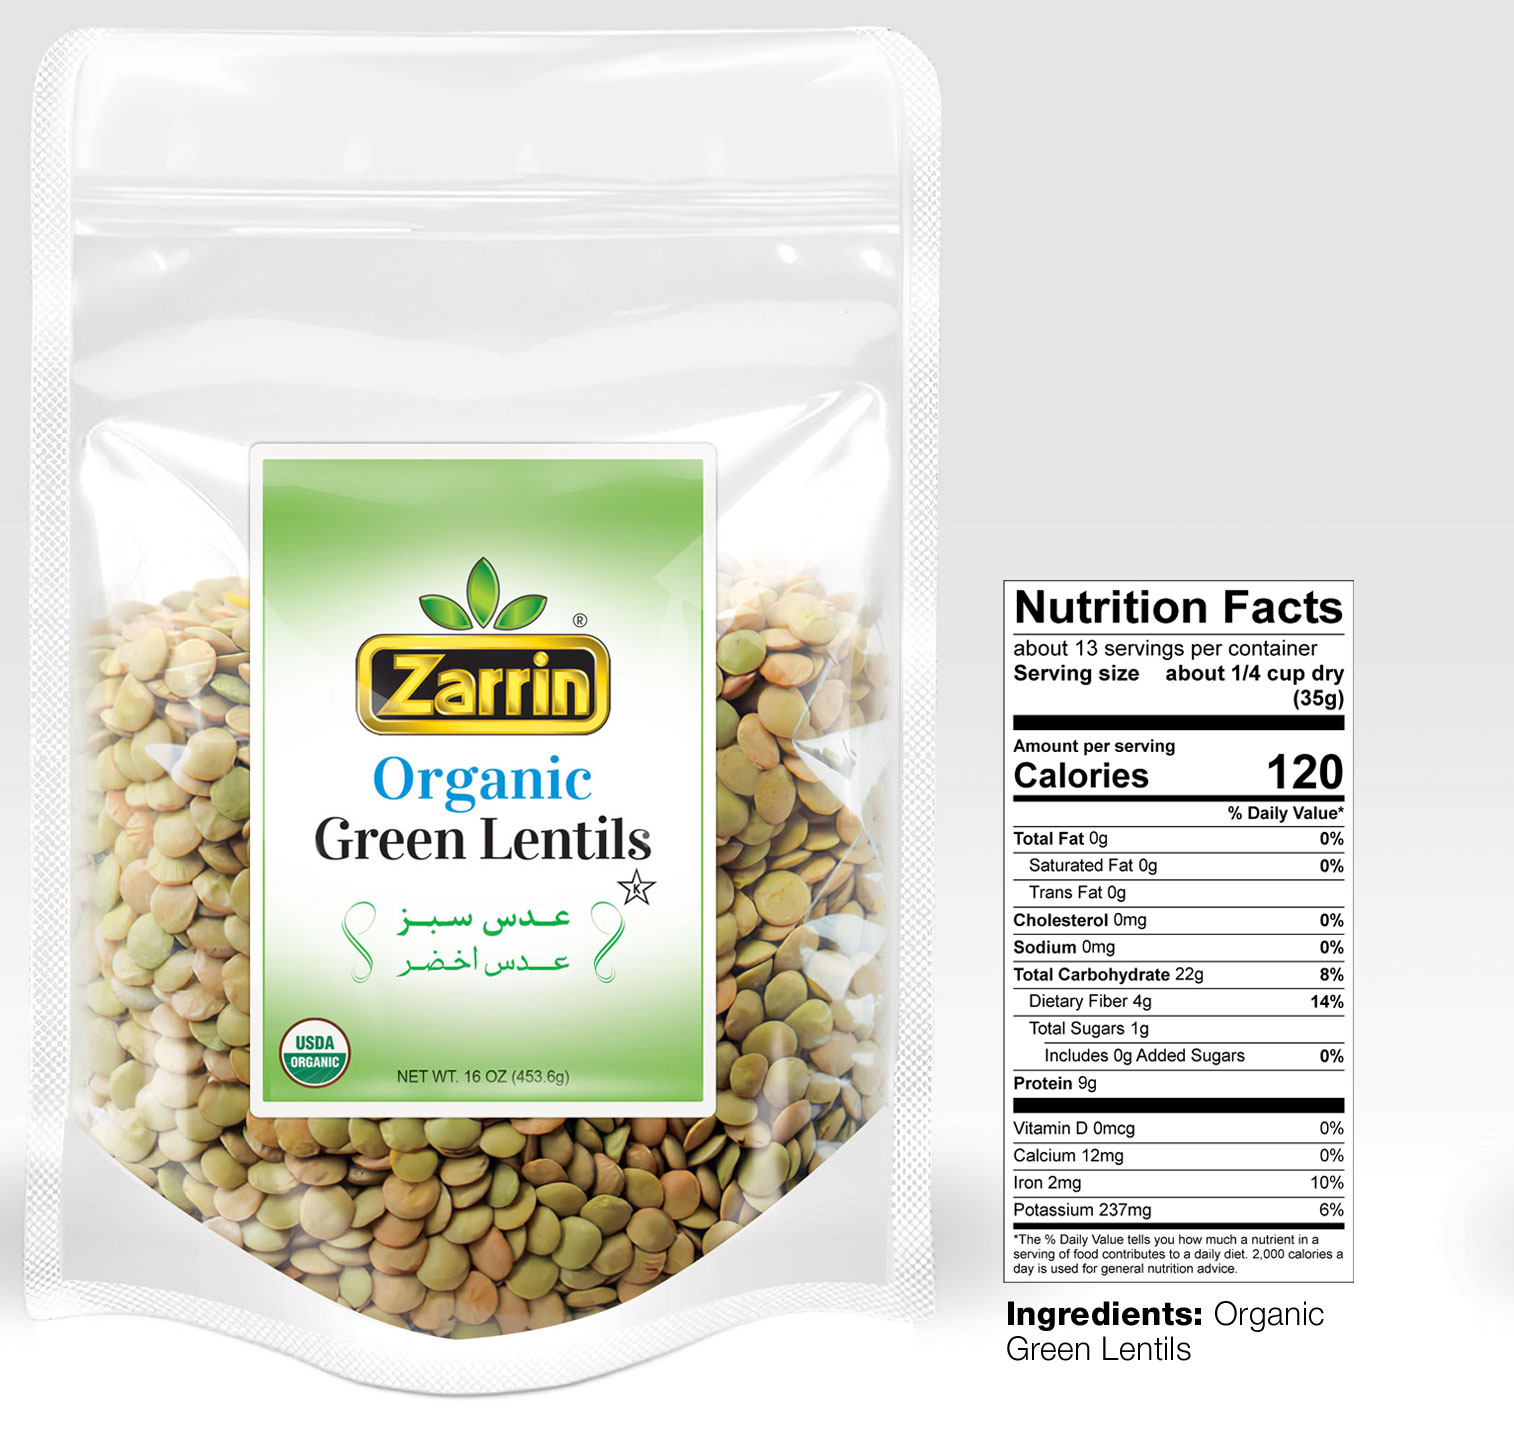 Organic Green Lentils in 16oz by Zarrin.